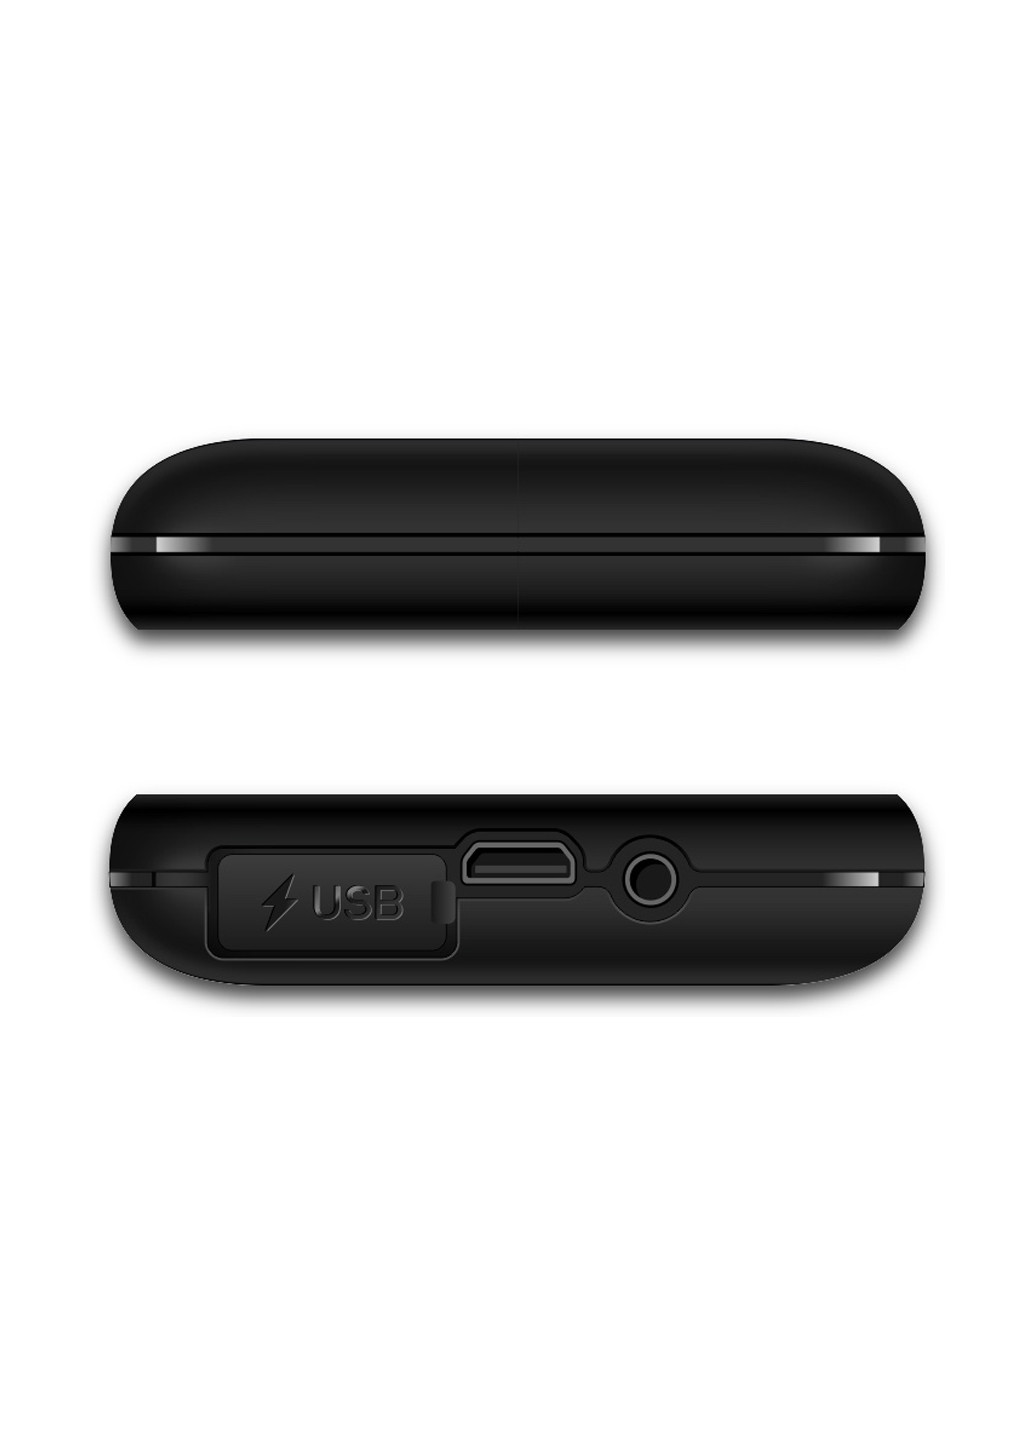 Мобильный телефон Sigma mobile x-style 31 power black (130940045)